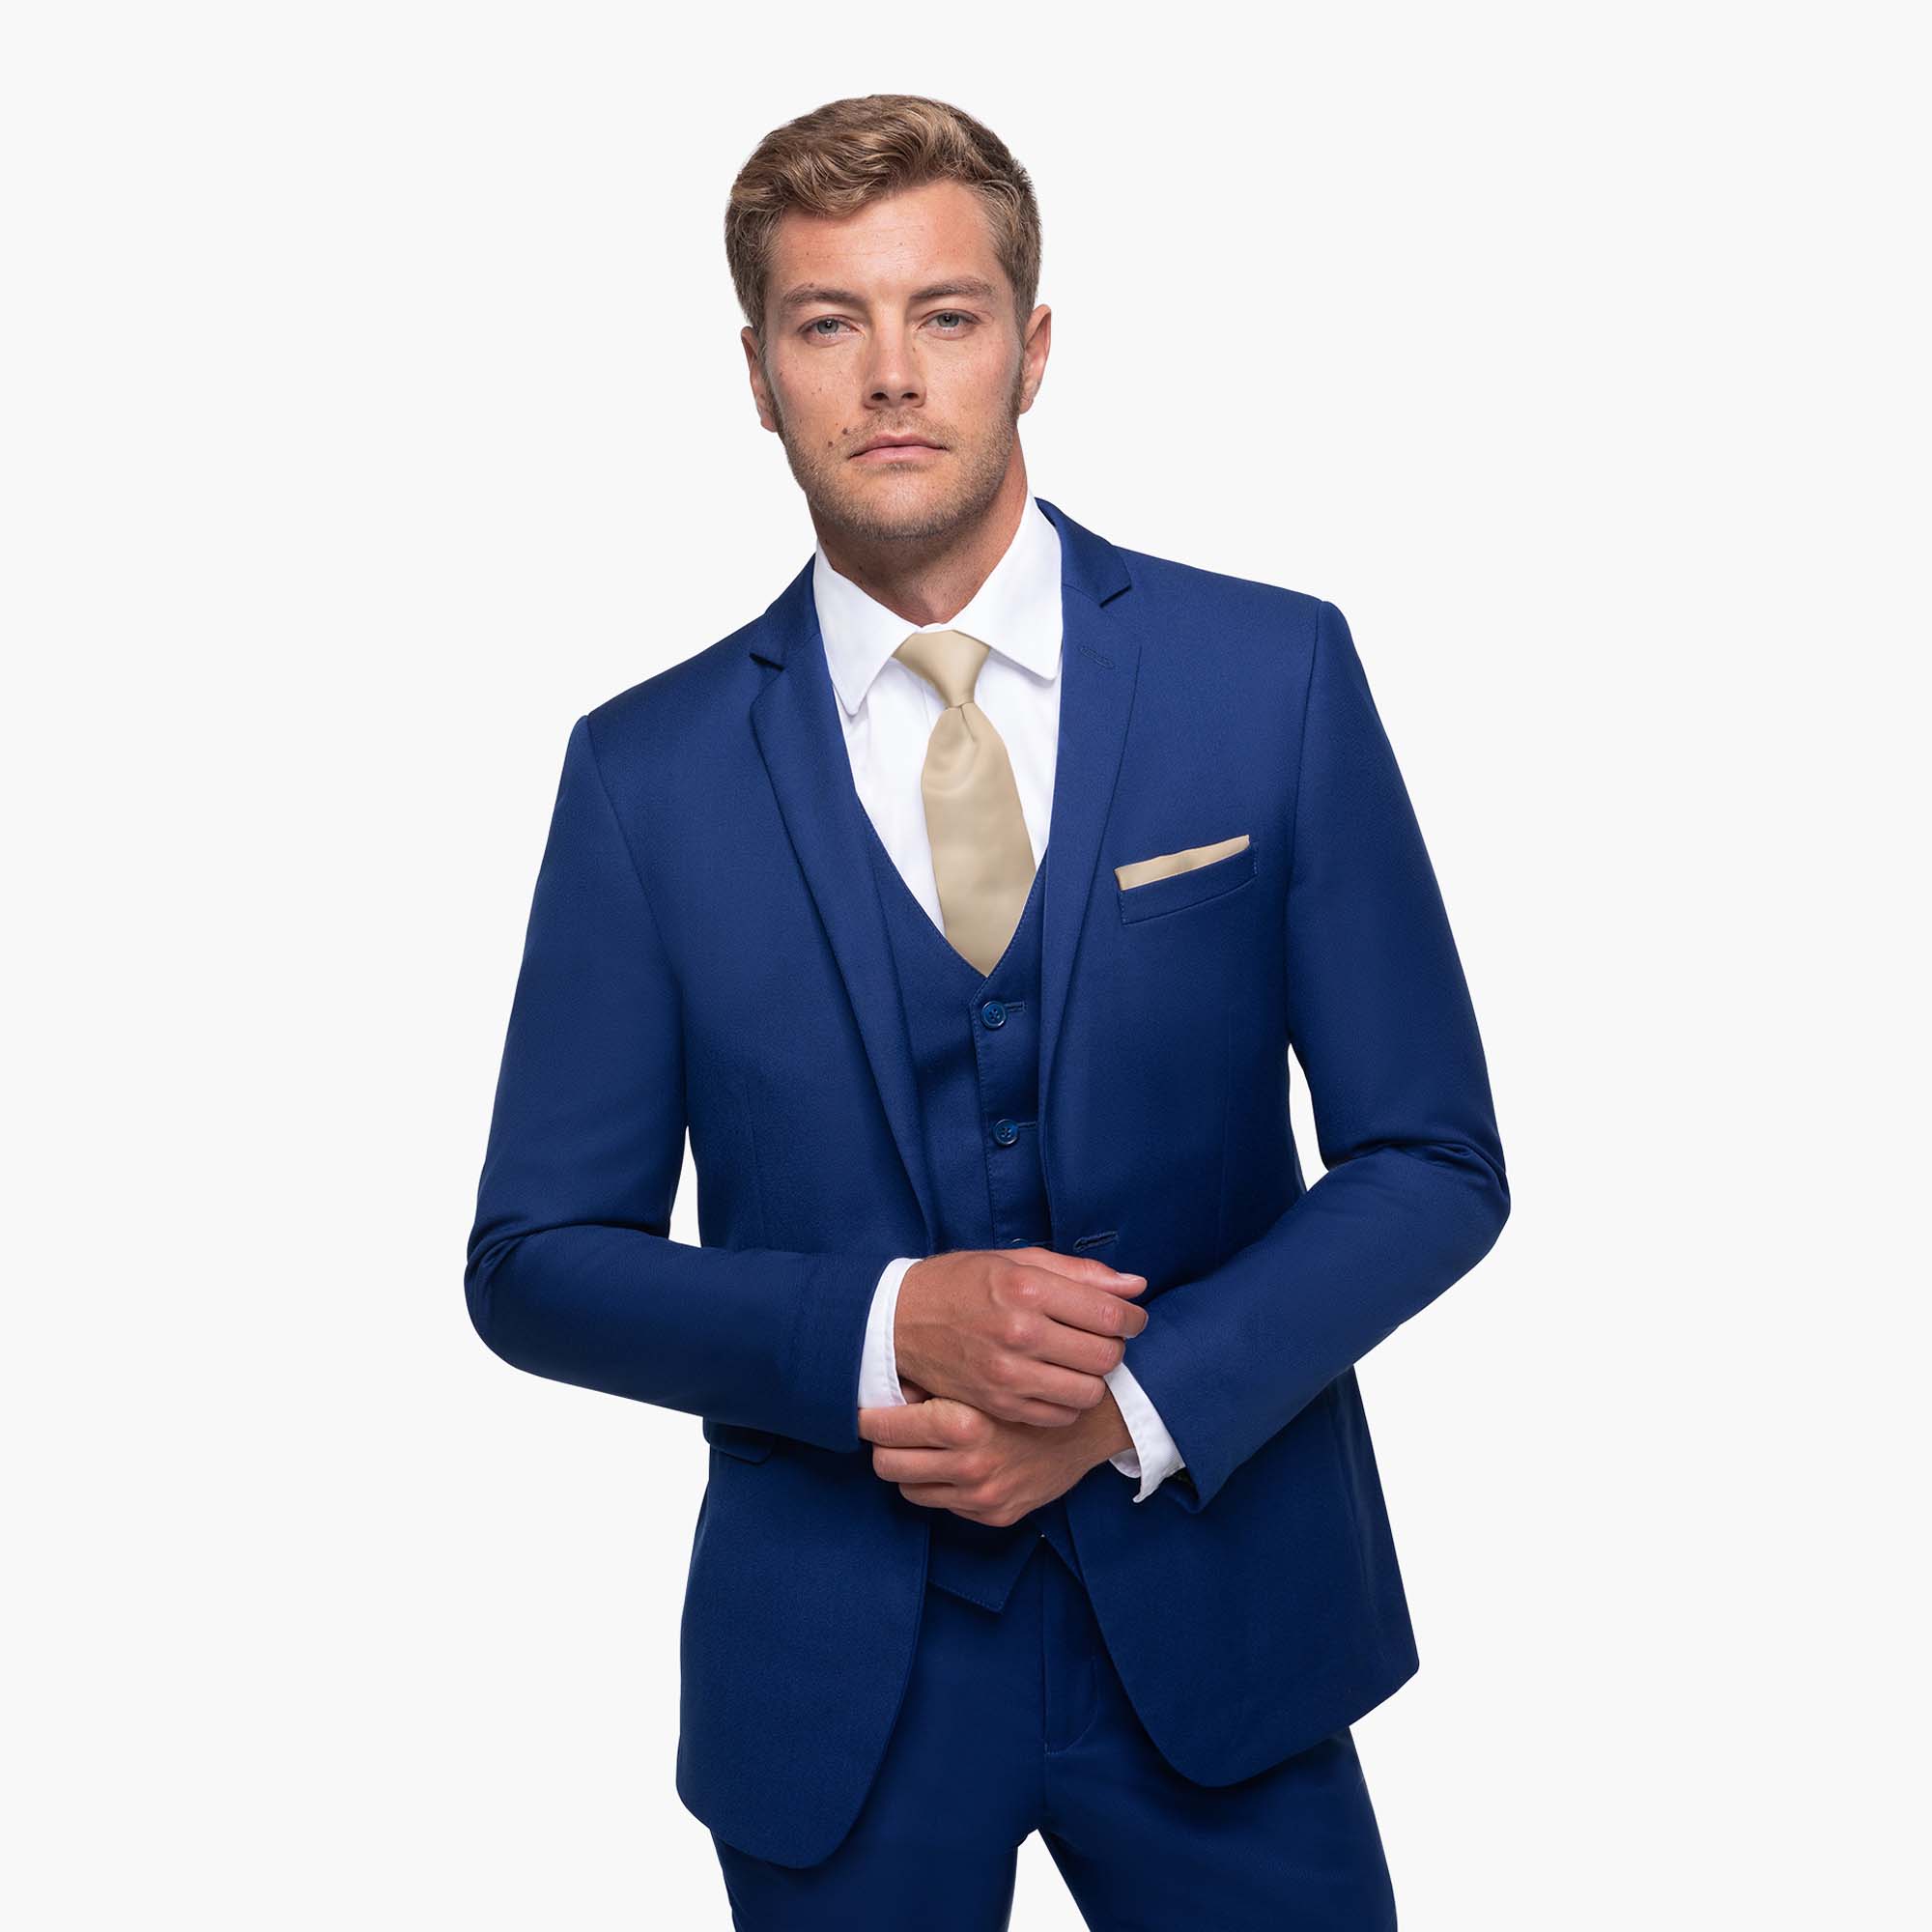 8 Royal Blue Suit ideas  blue suit, royal blue suit, wedding suits